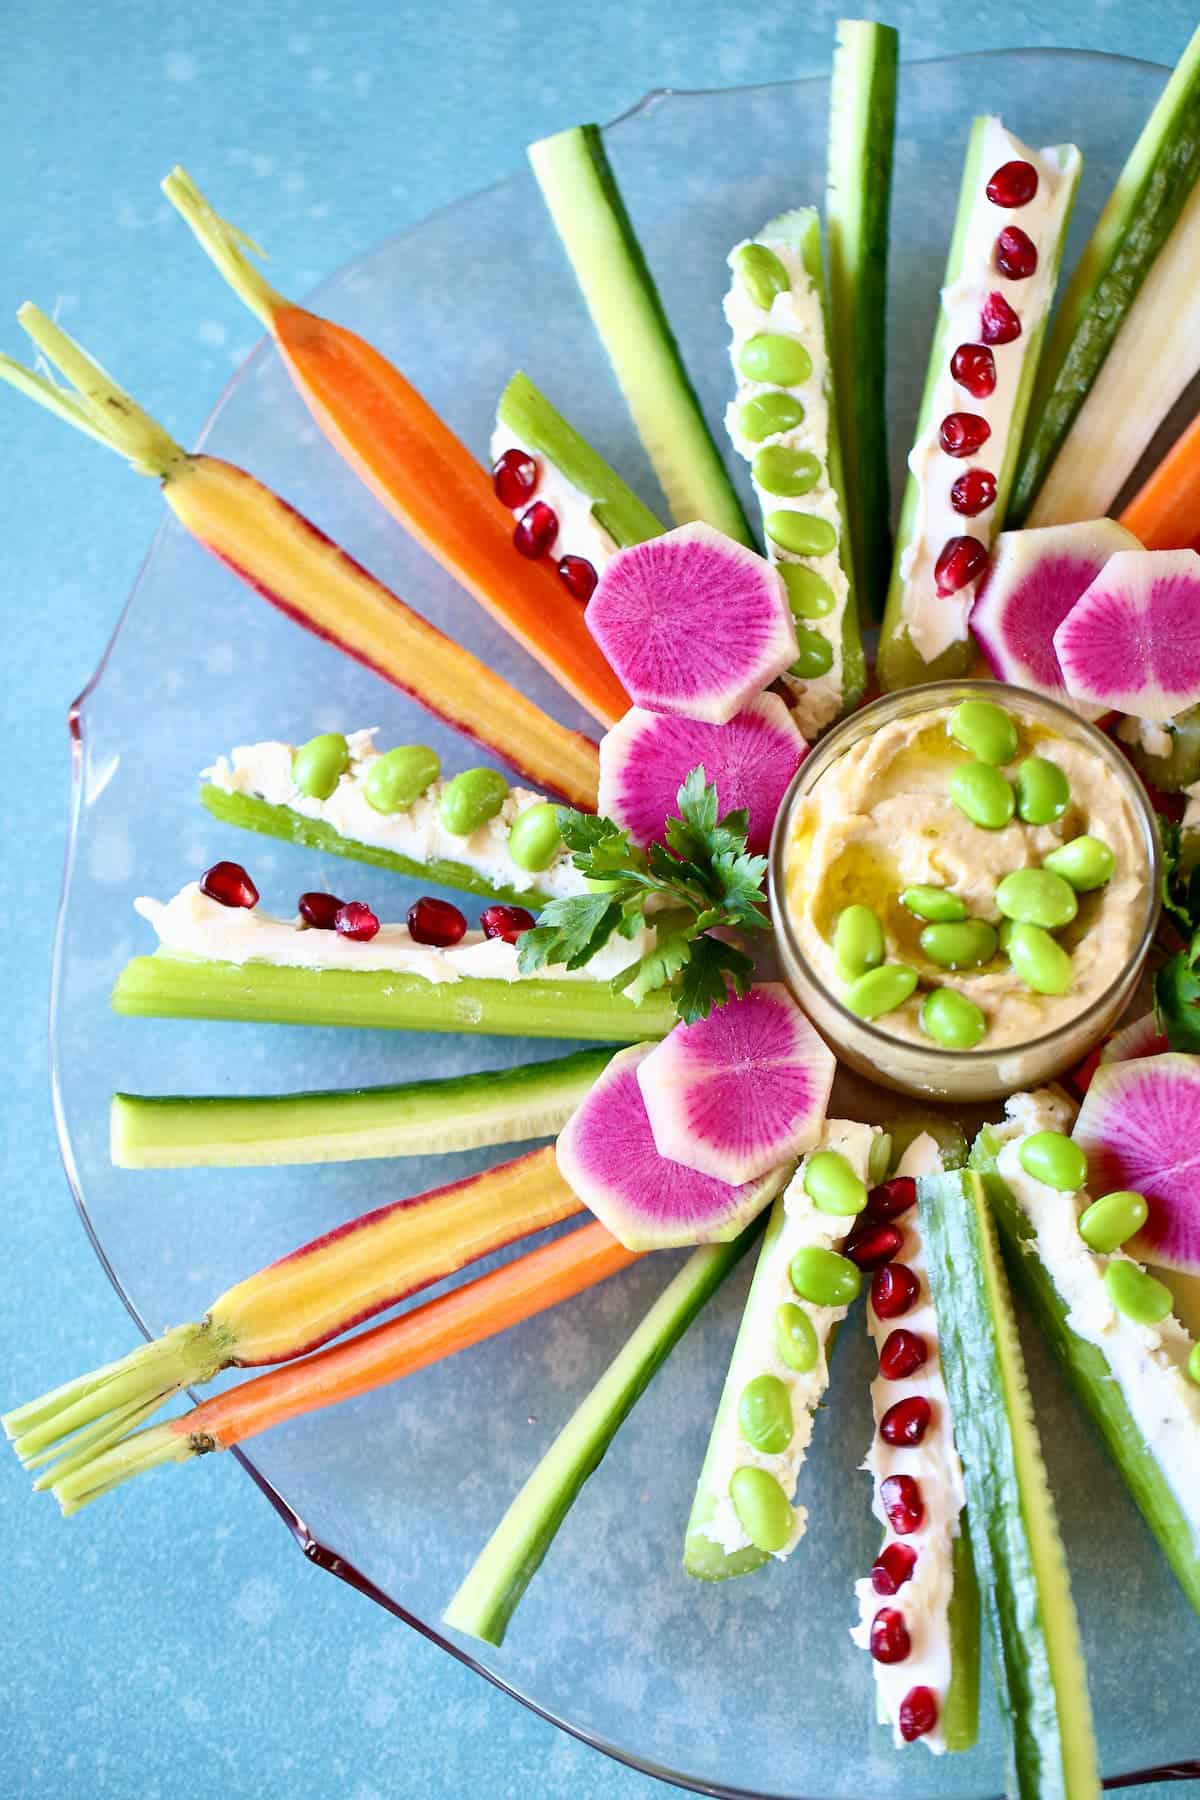 a platter of vegetables, arranged decoratively.  